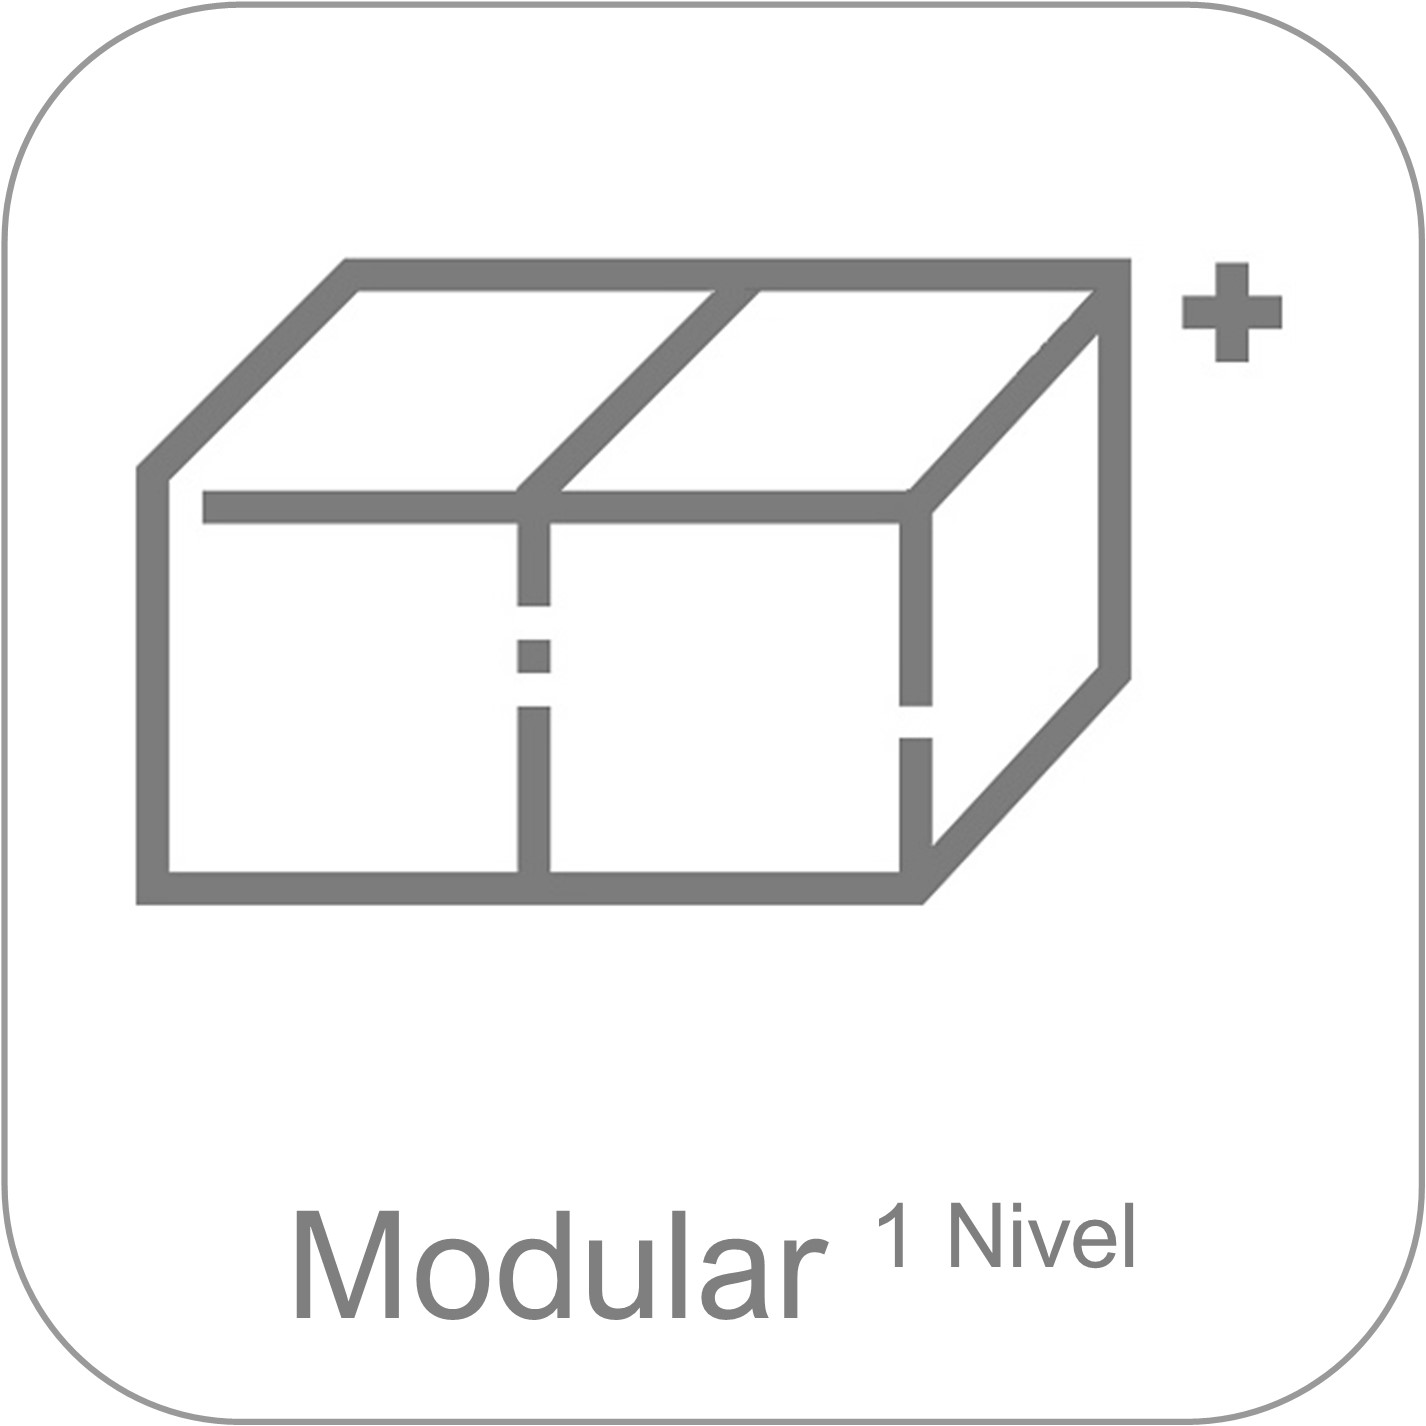 Monobloque NIC20 - Oficinas móviles - Modular